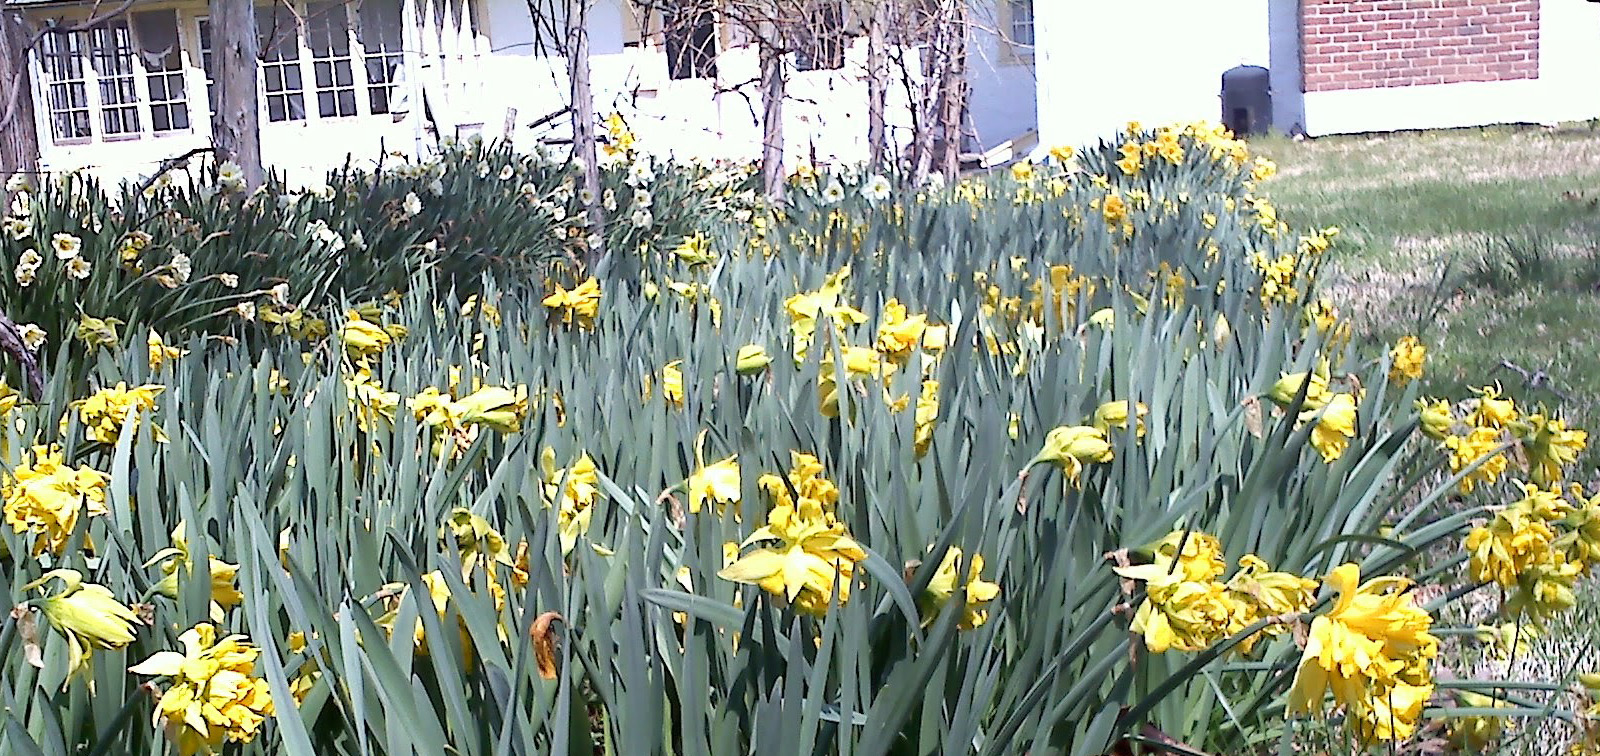 photo of daffodils at the Penrose-Strawbridge House in Horsham